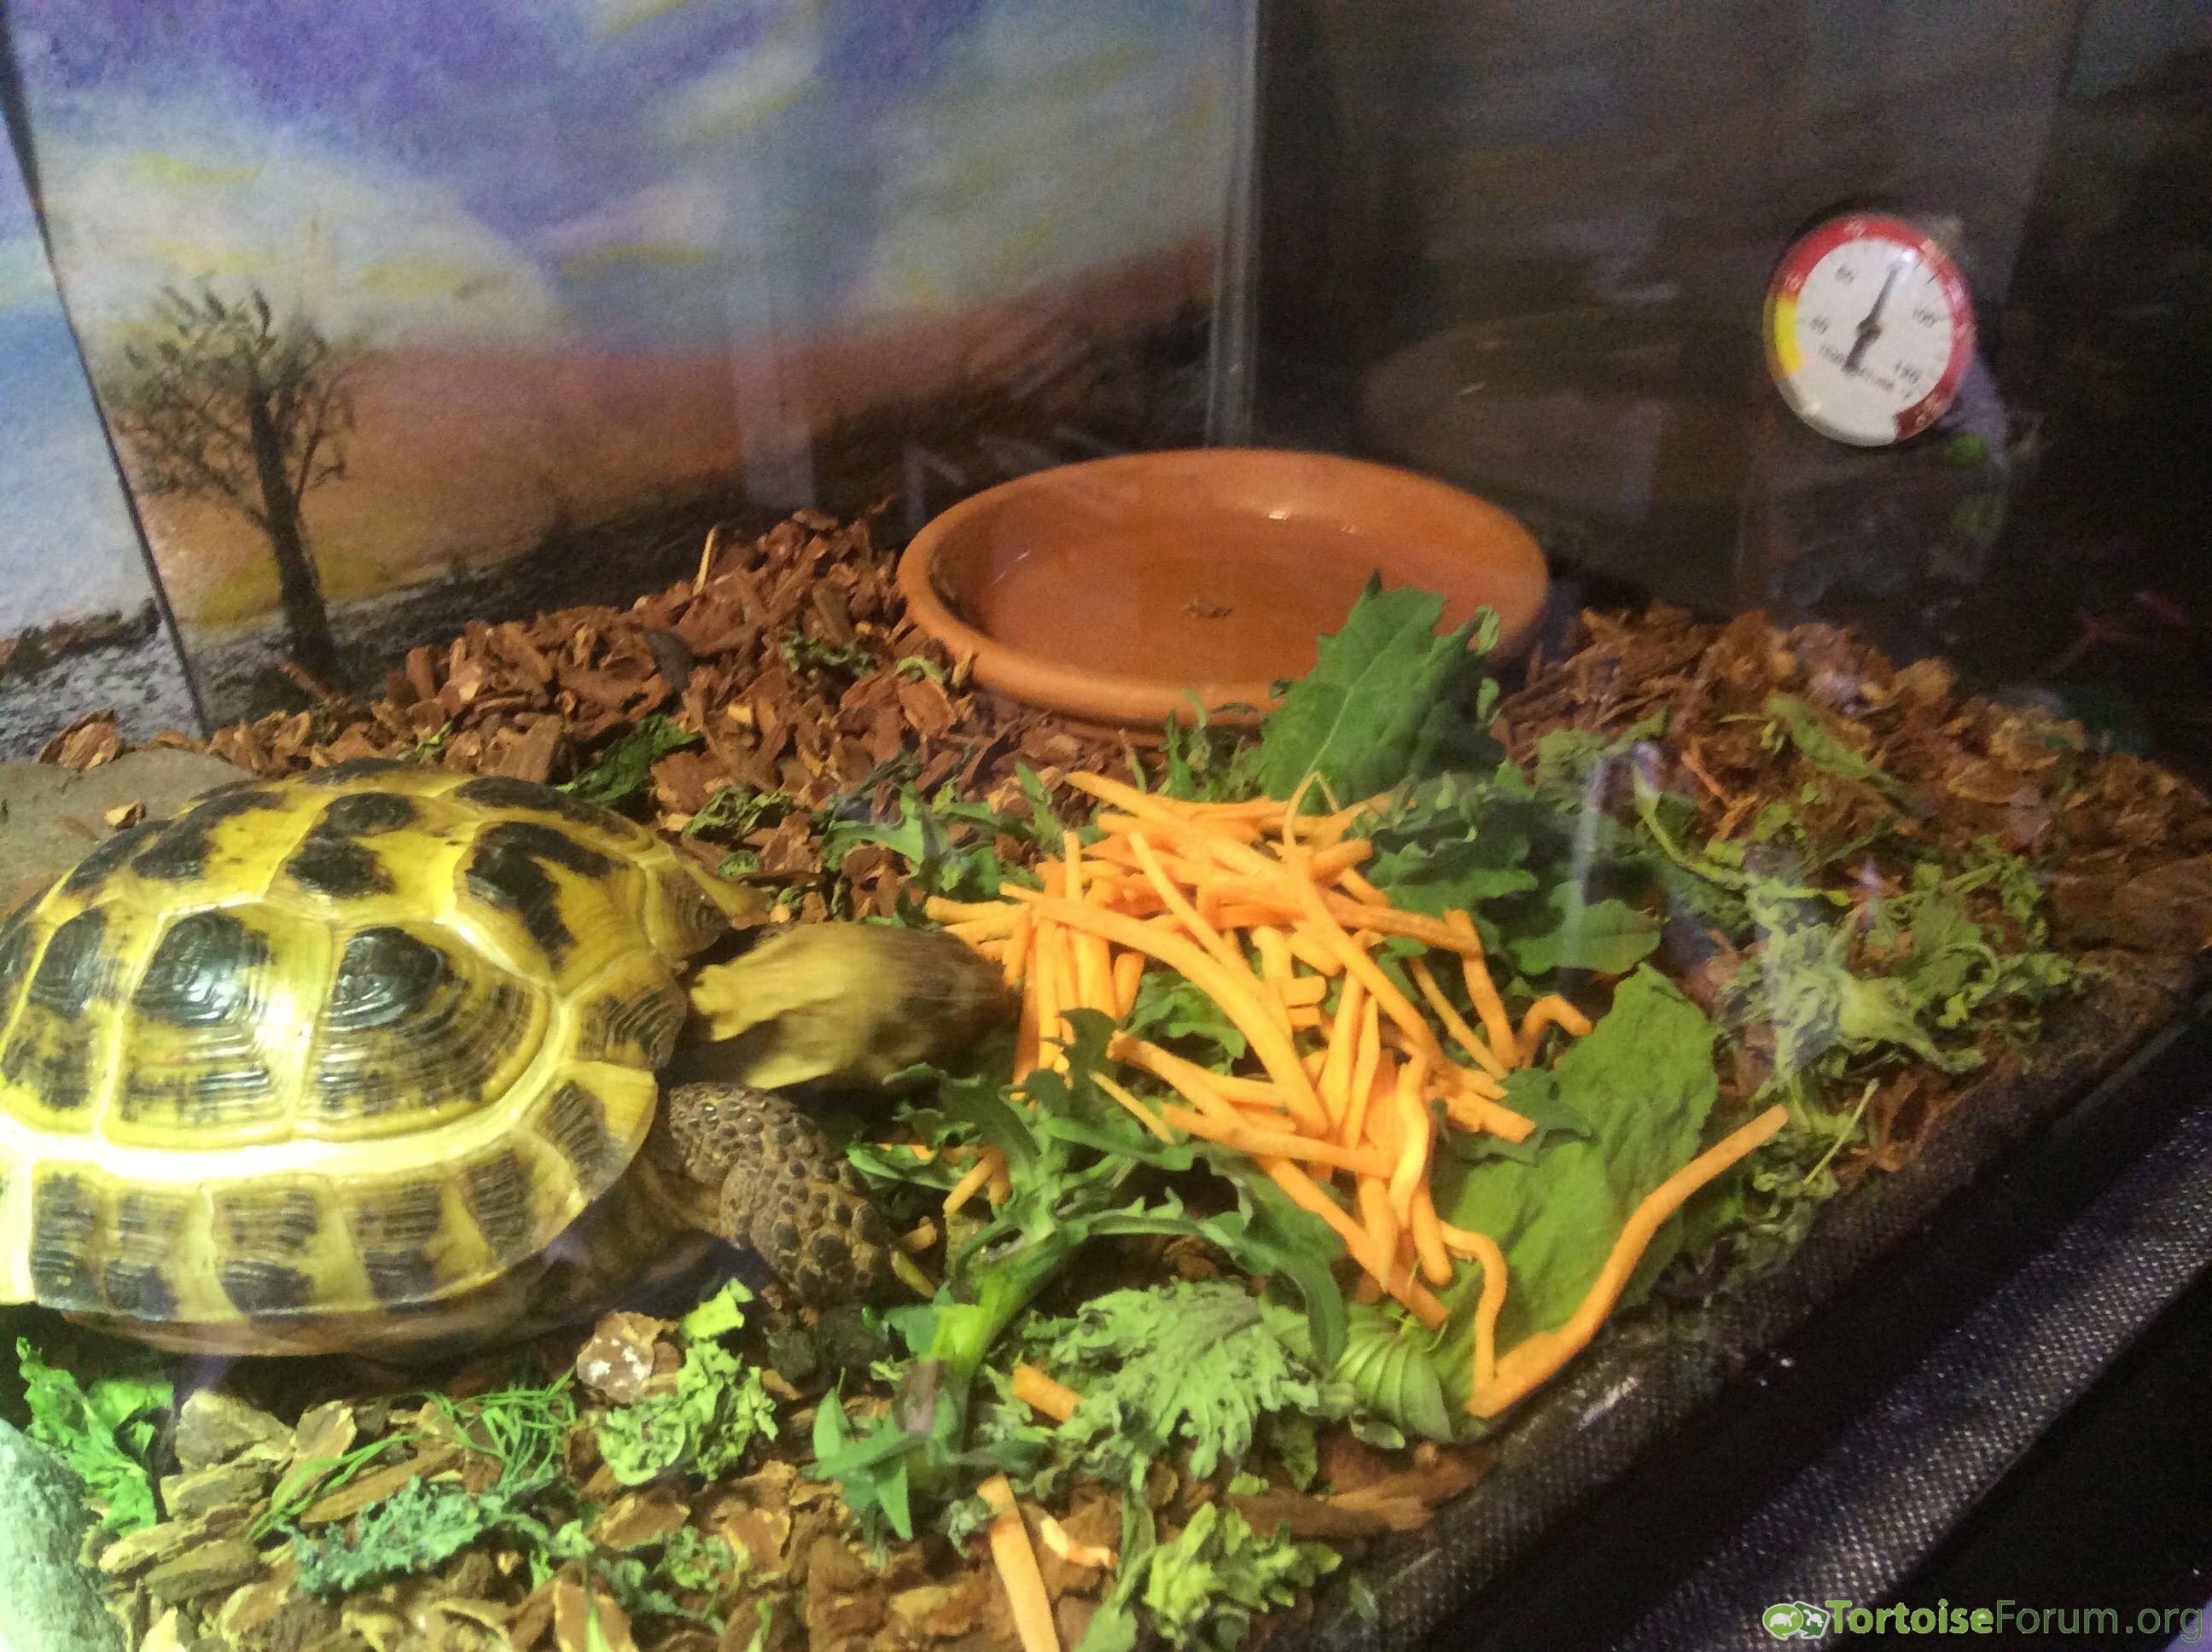 Happy national tortoise day Betty!